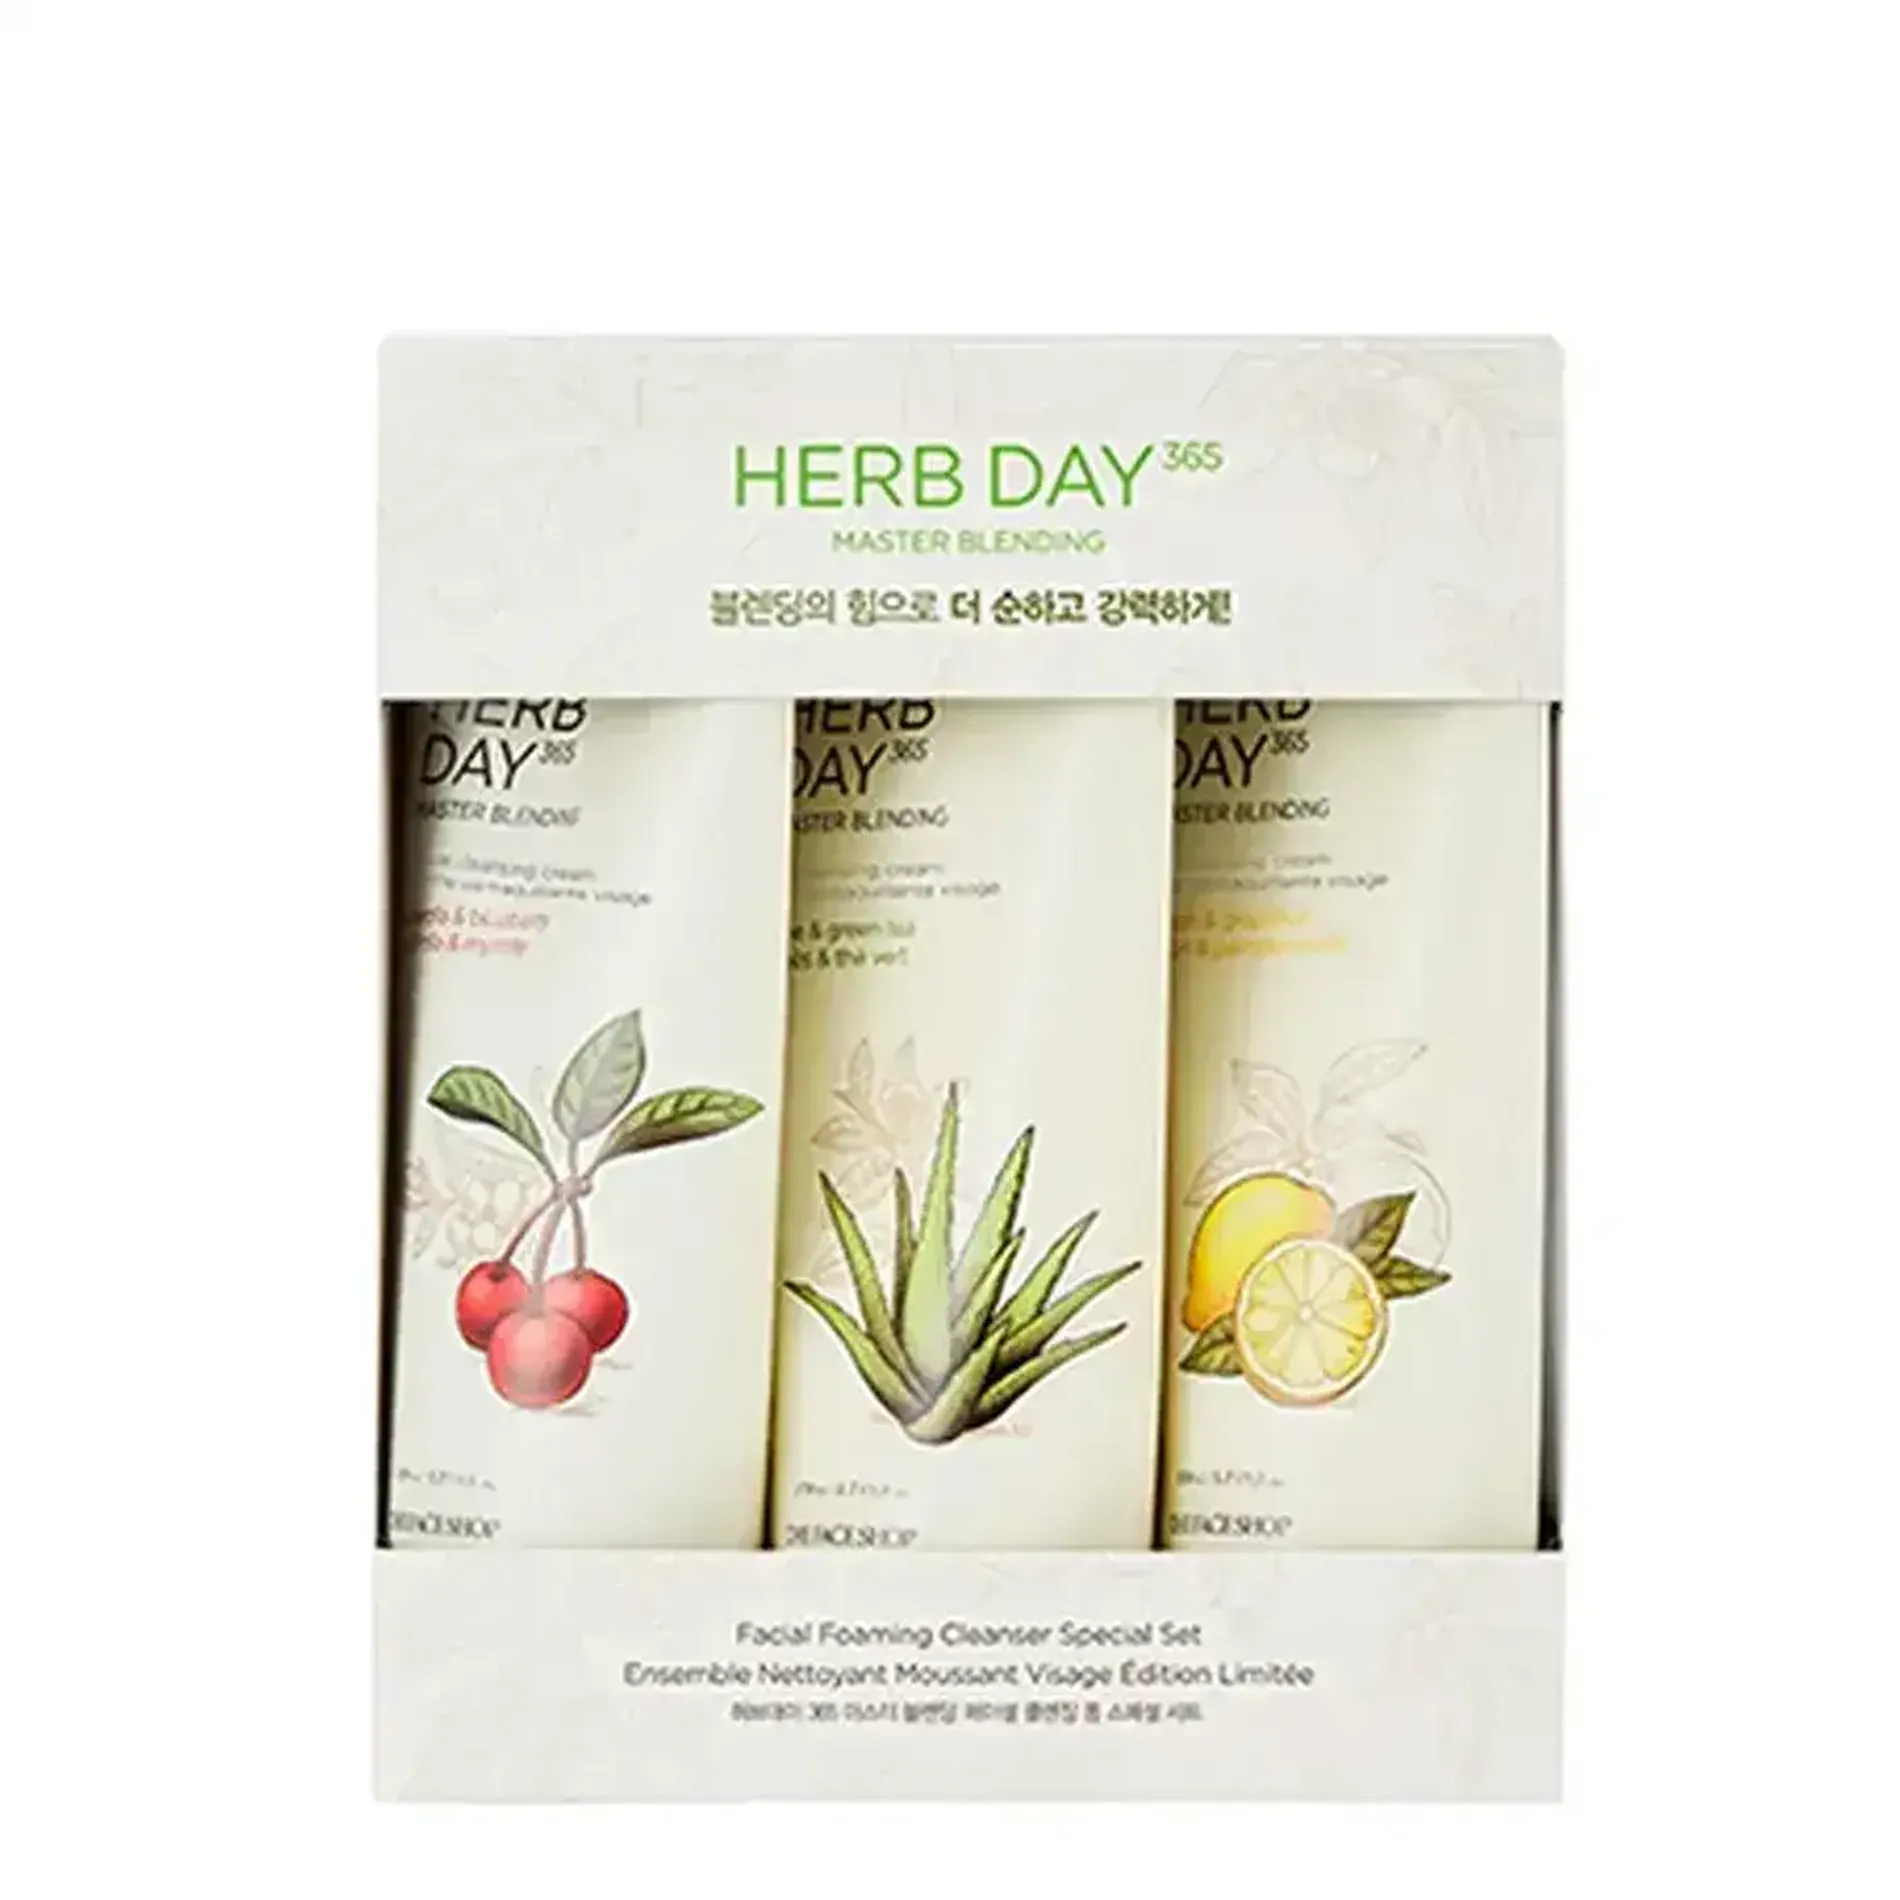 bo-sua-rua-mat-herb-day-365-master-blending-facial-foaming-cleanser-special-set-3pc-1